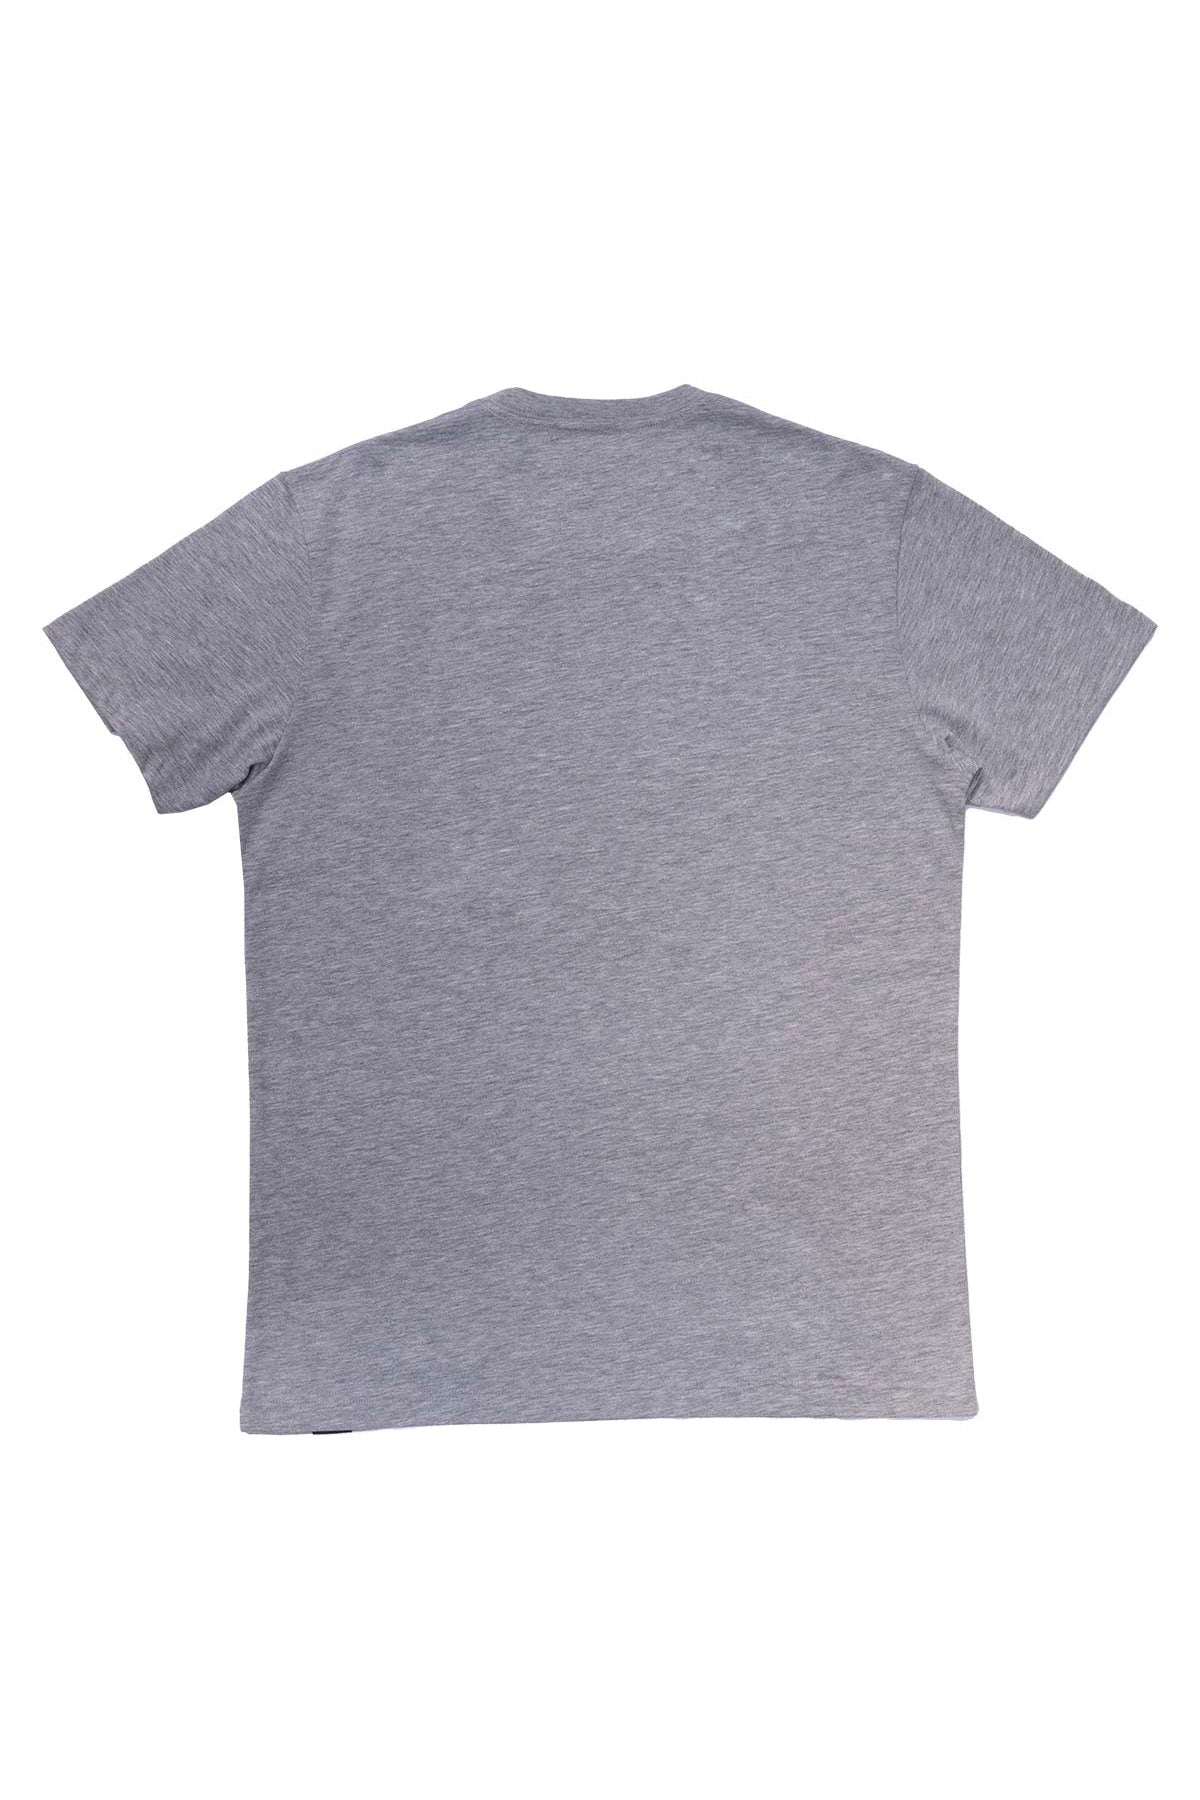 Izo Basic Short Sleeve Crew Neck T-Shirt - Grey Marl - Stafu Pro Series